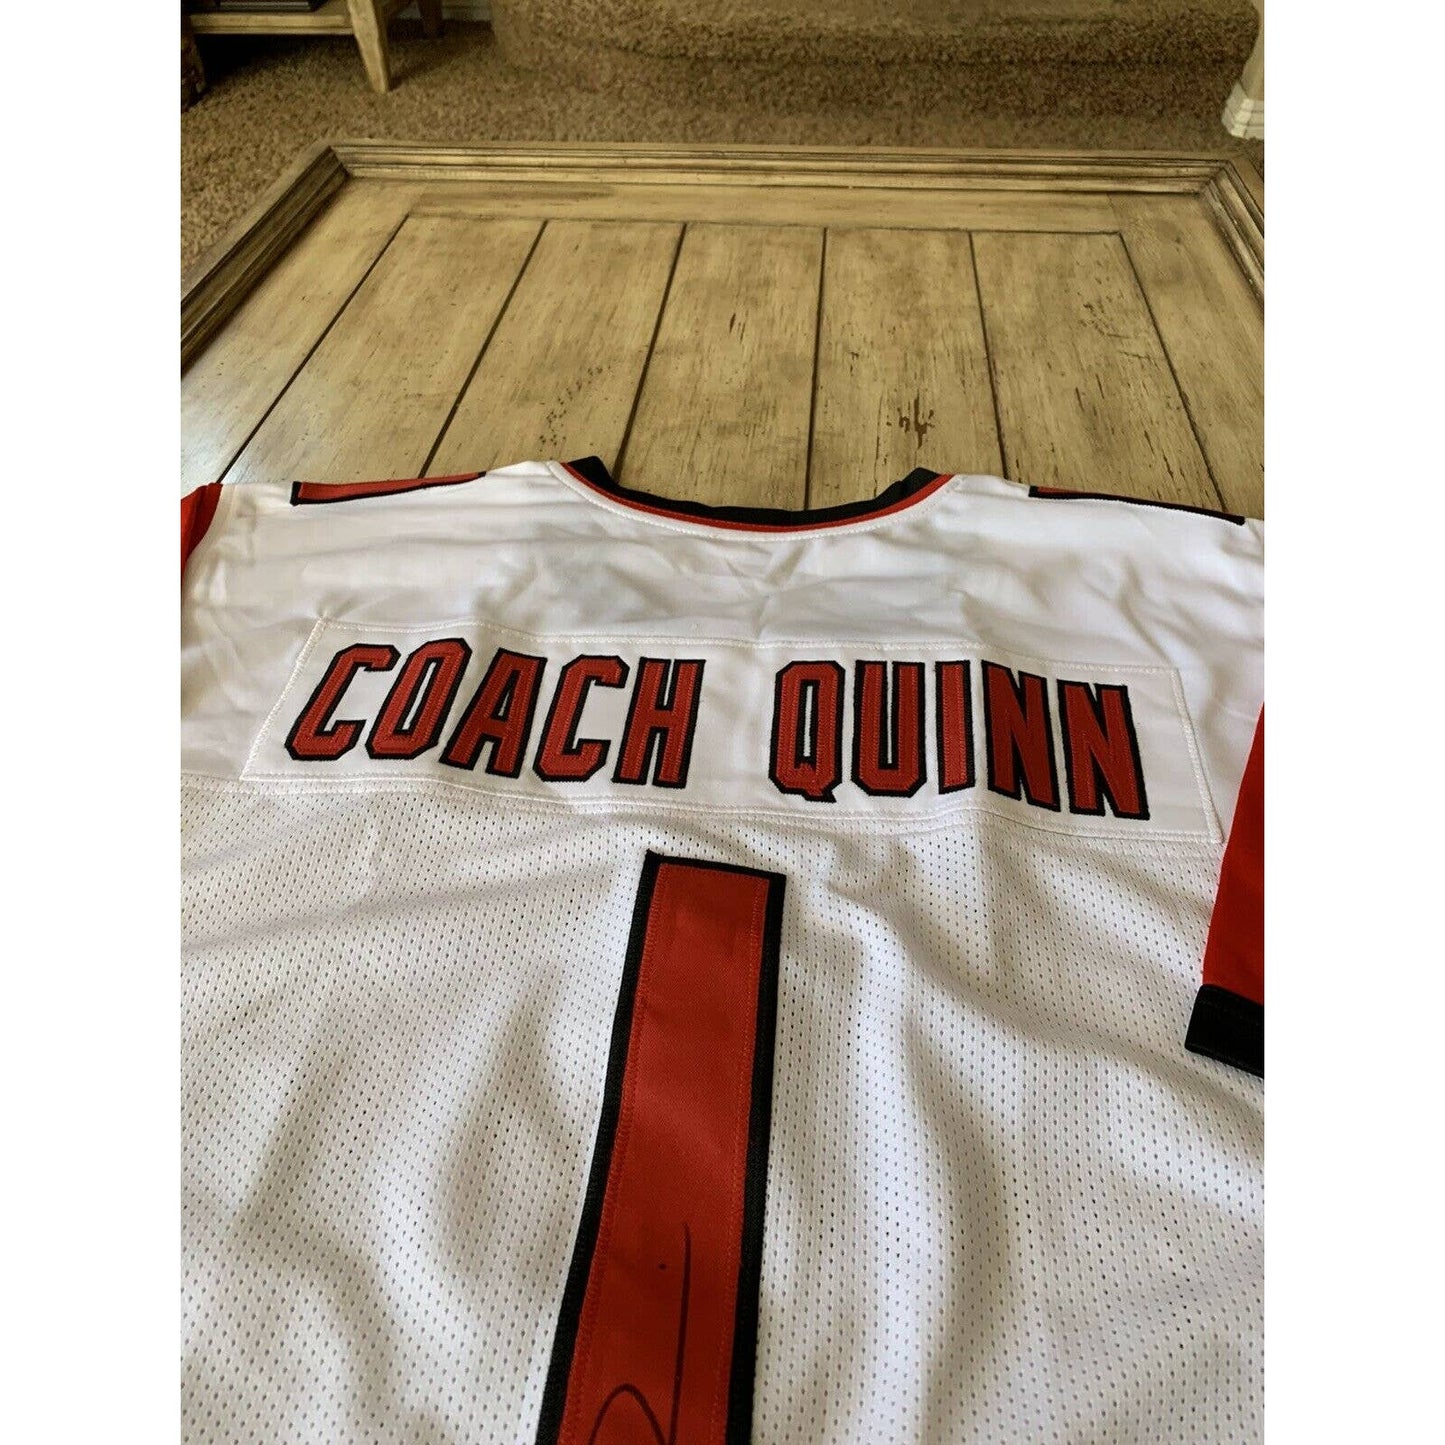 Dan Quinn Autographed/Signed Jersey Atlanta Falcons Coach - TreasuresEvolved